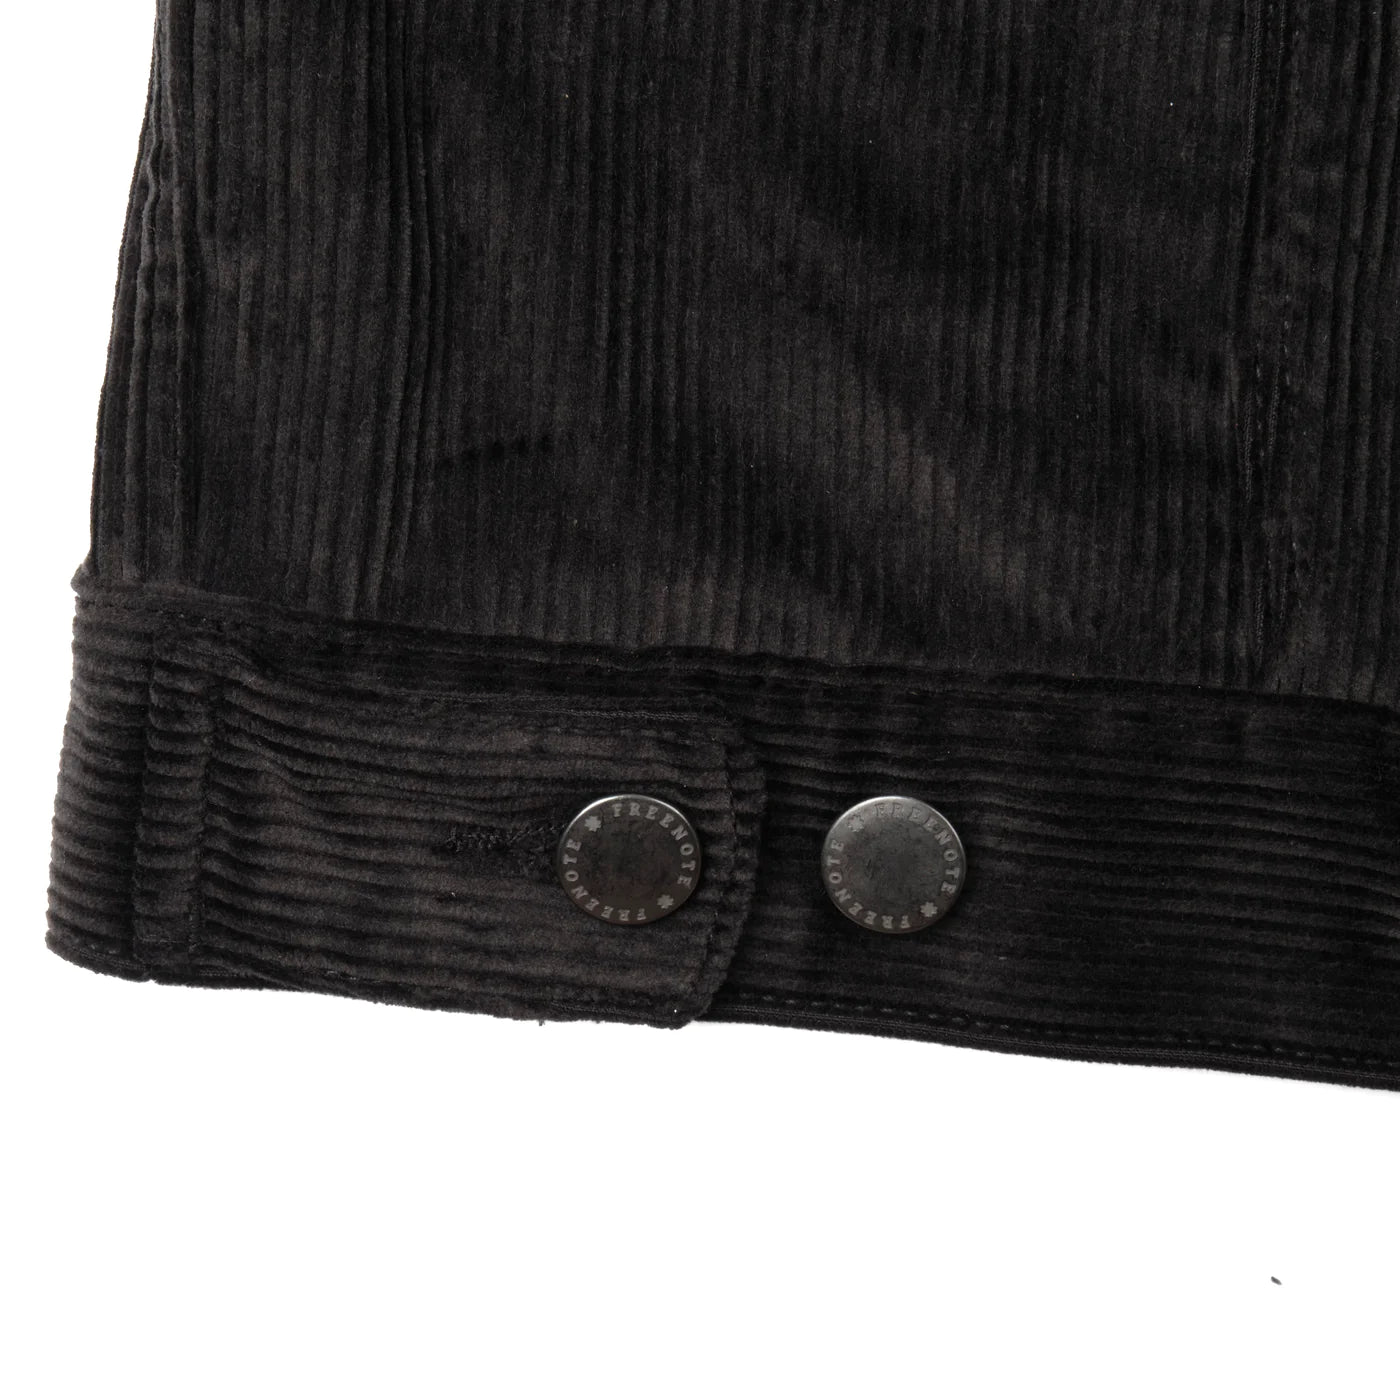 Freenote Cloth CD1 Classic Jacket - Black Corduroy